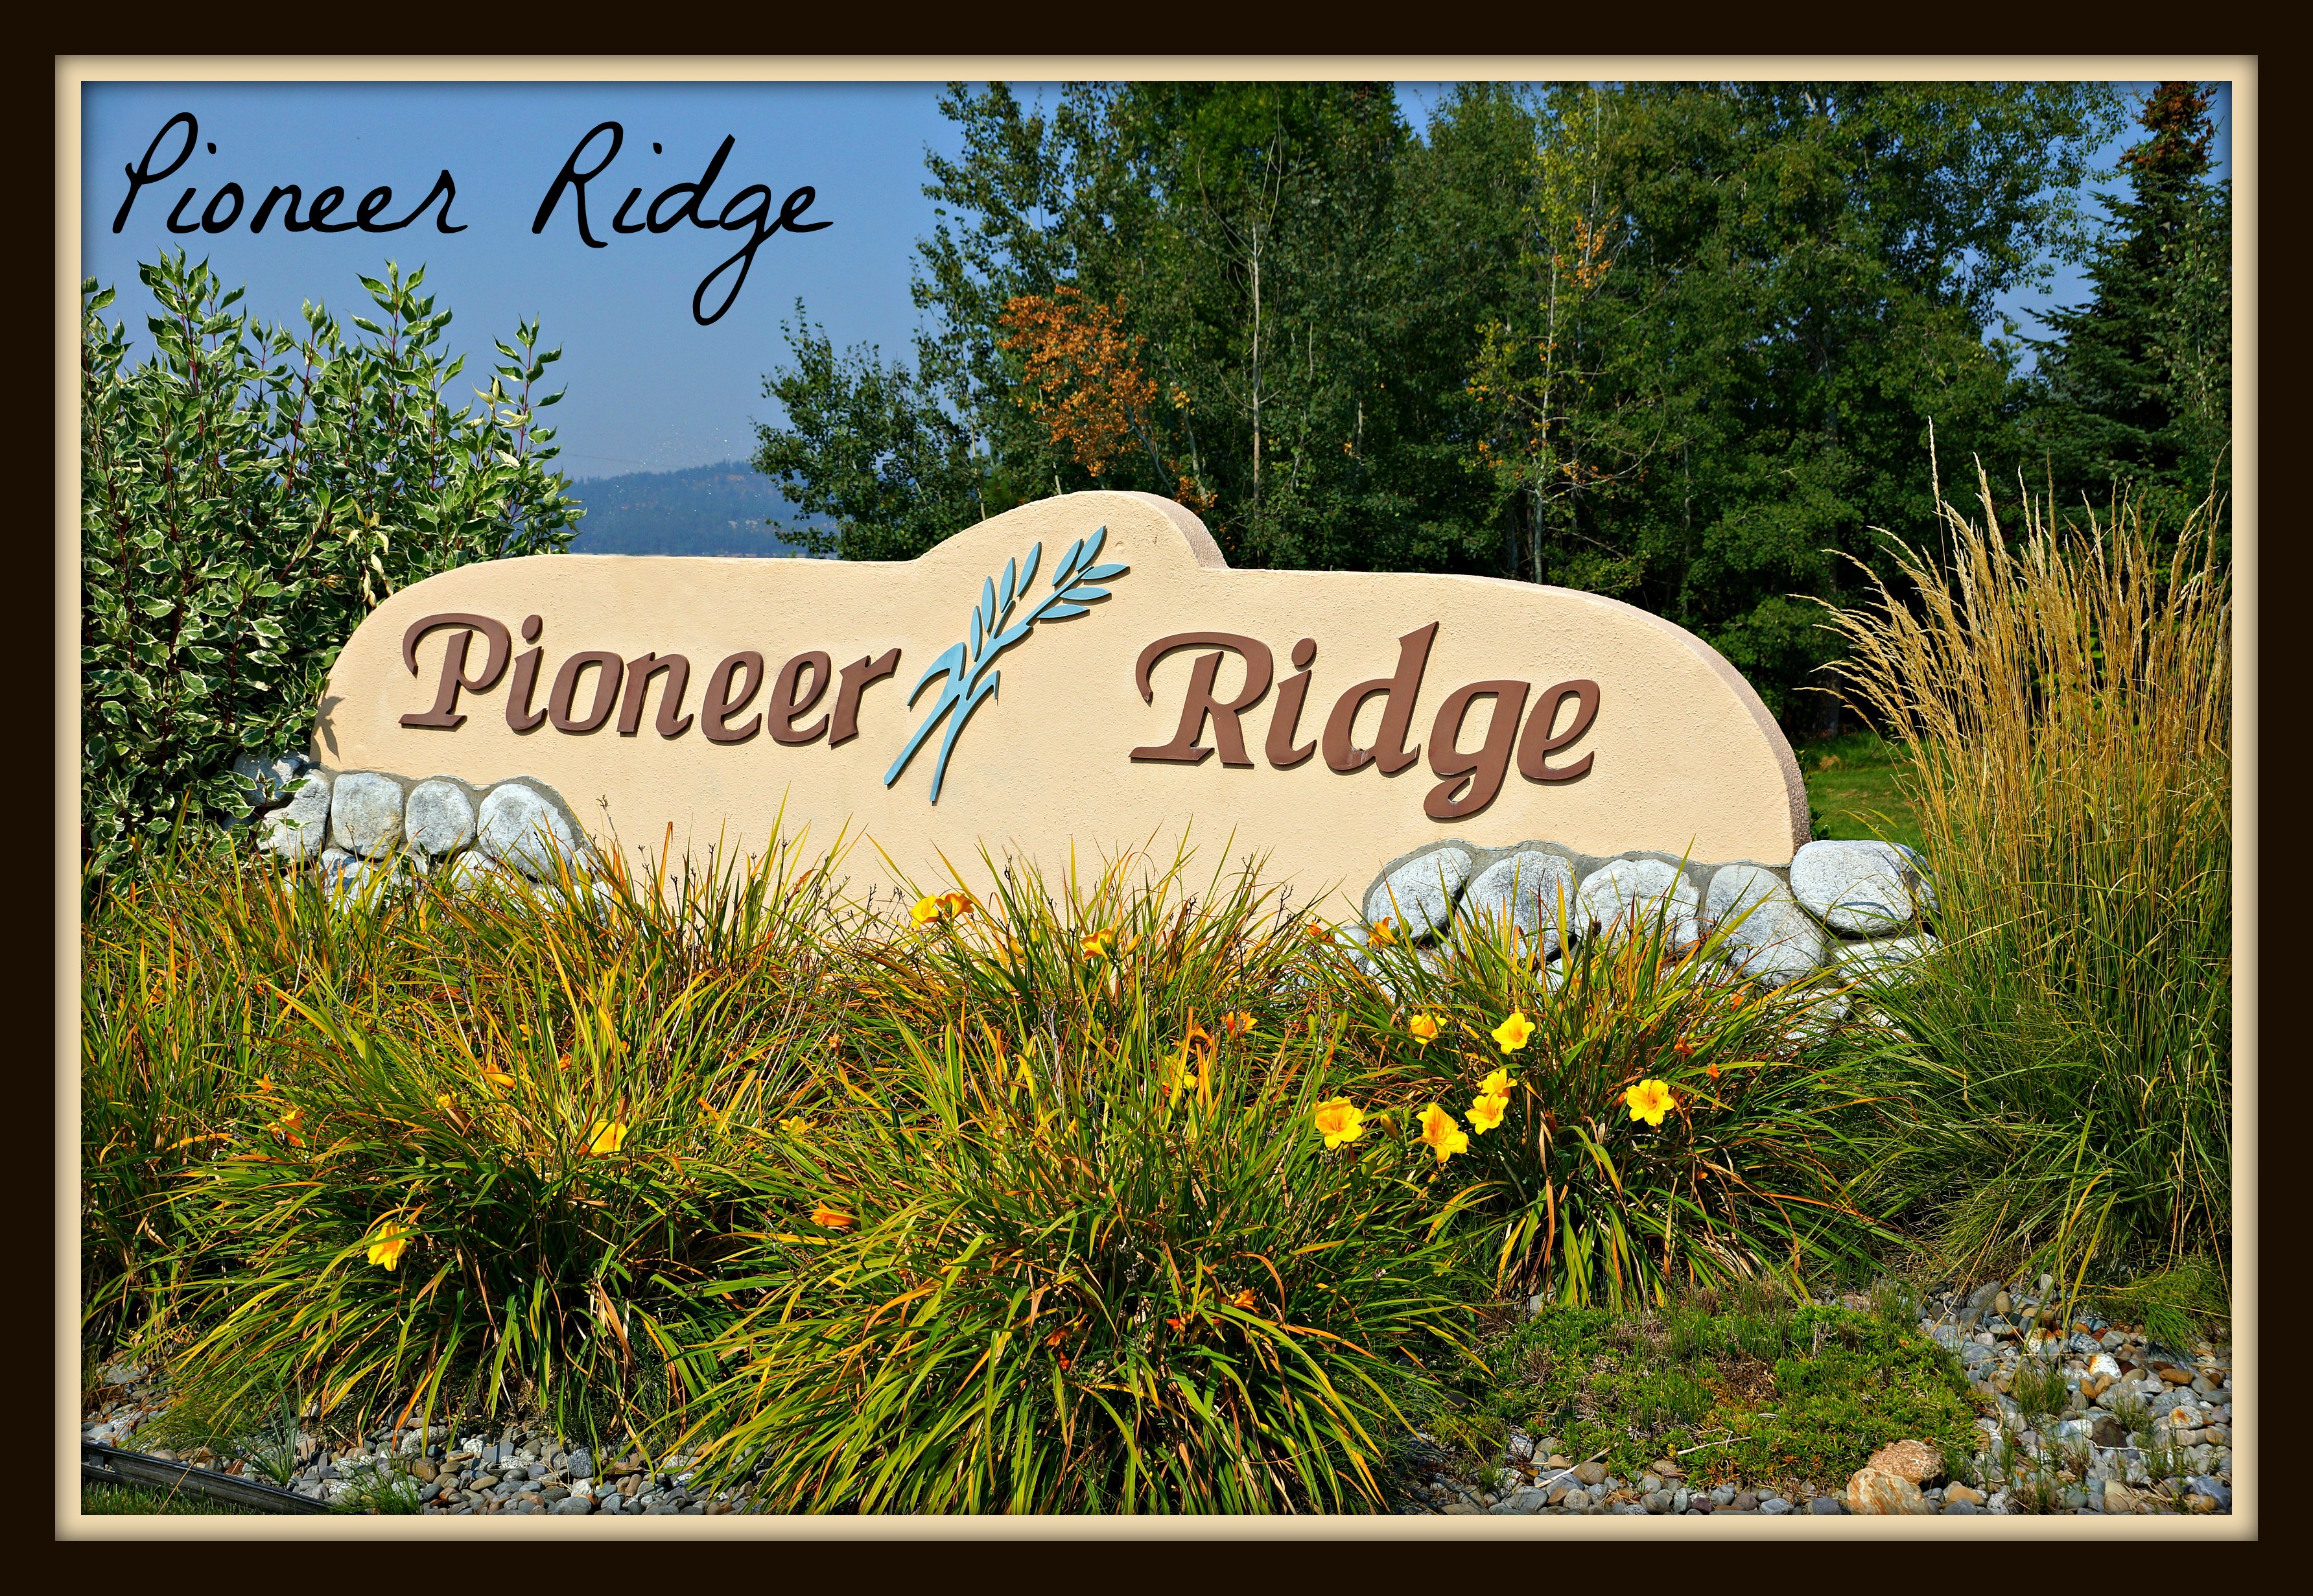 where is pioneer ridge